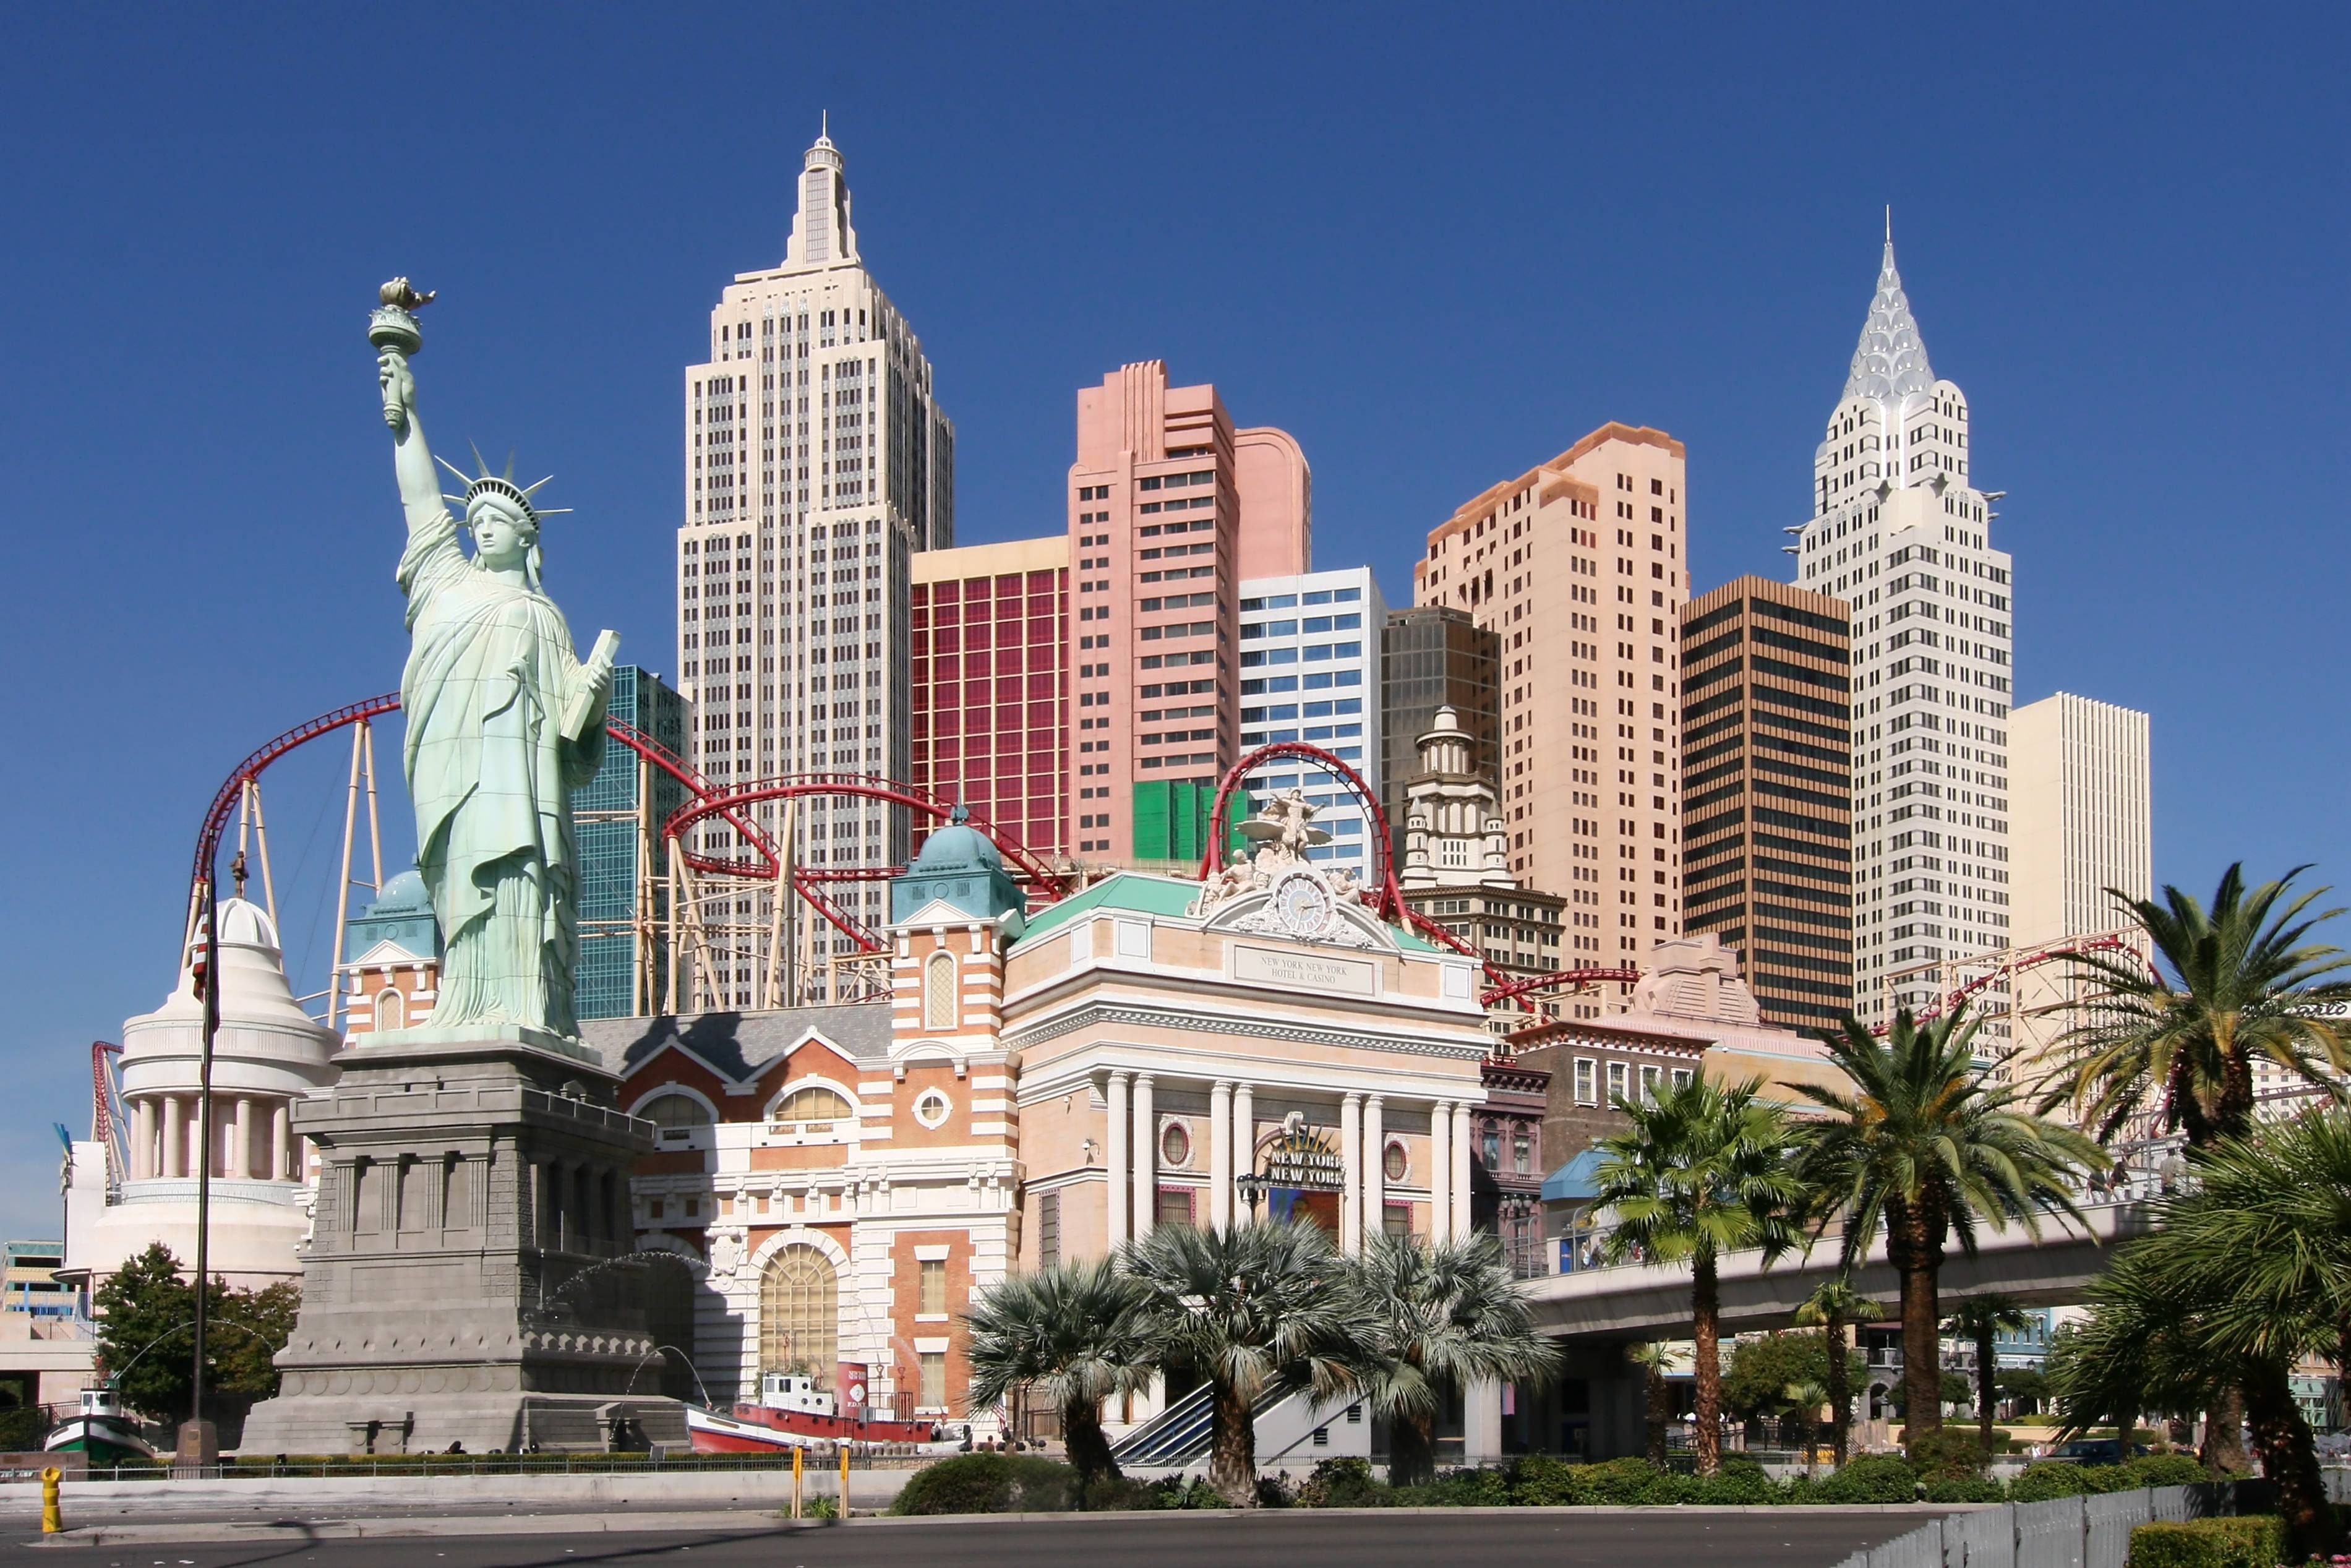 New York New York hotel Las Vegas | lasvegasjaunt.com